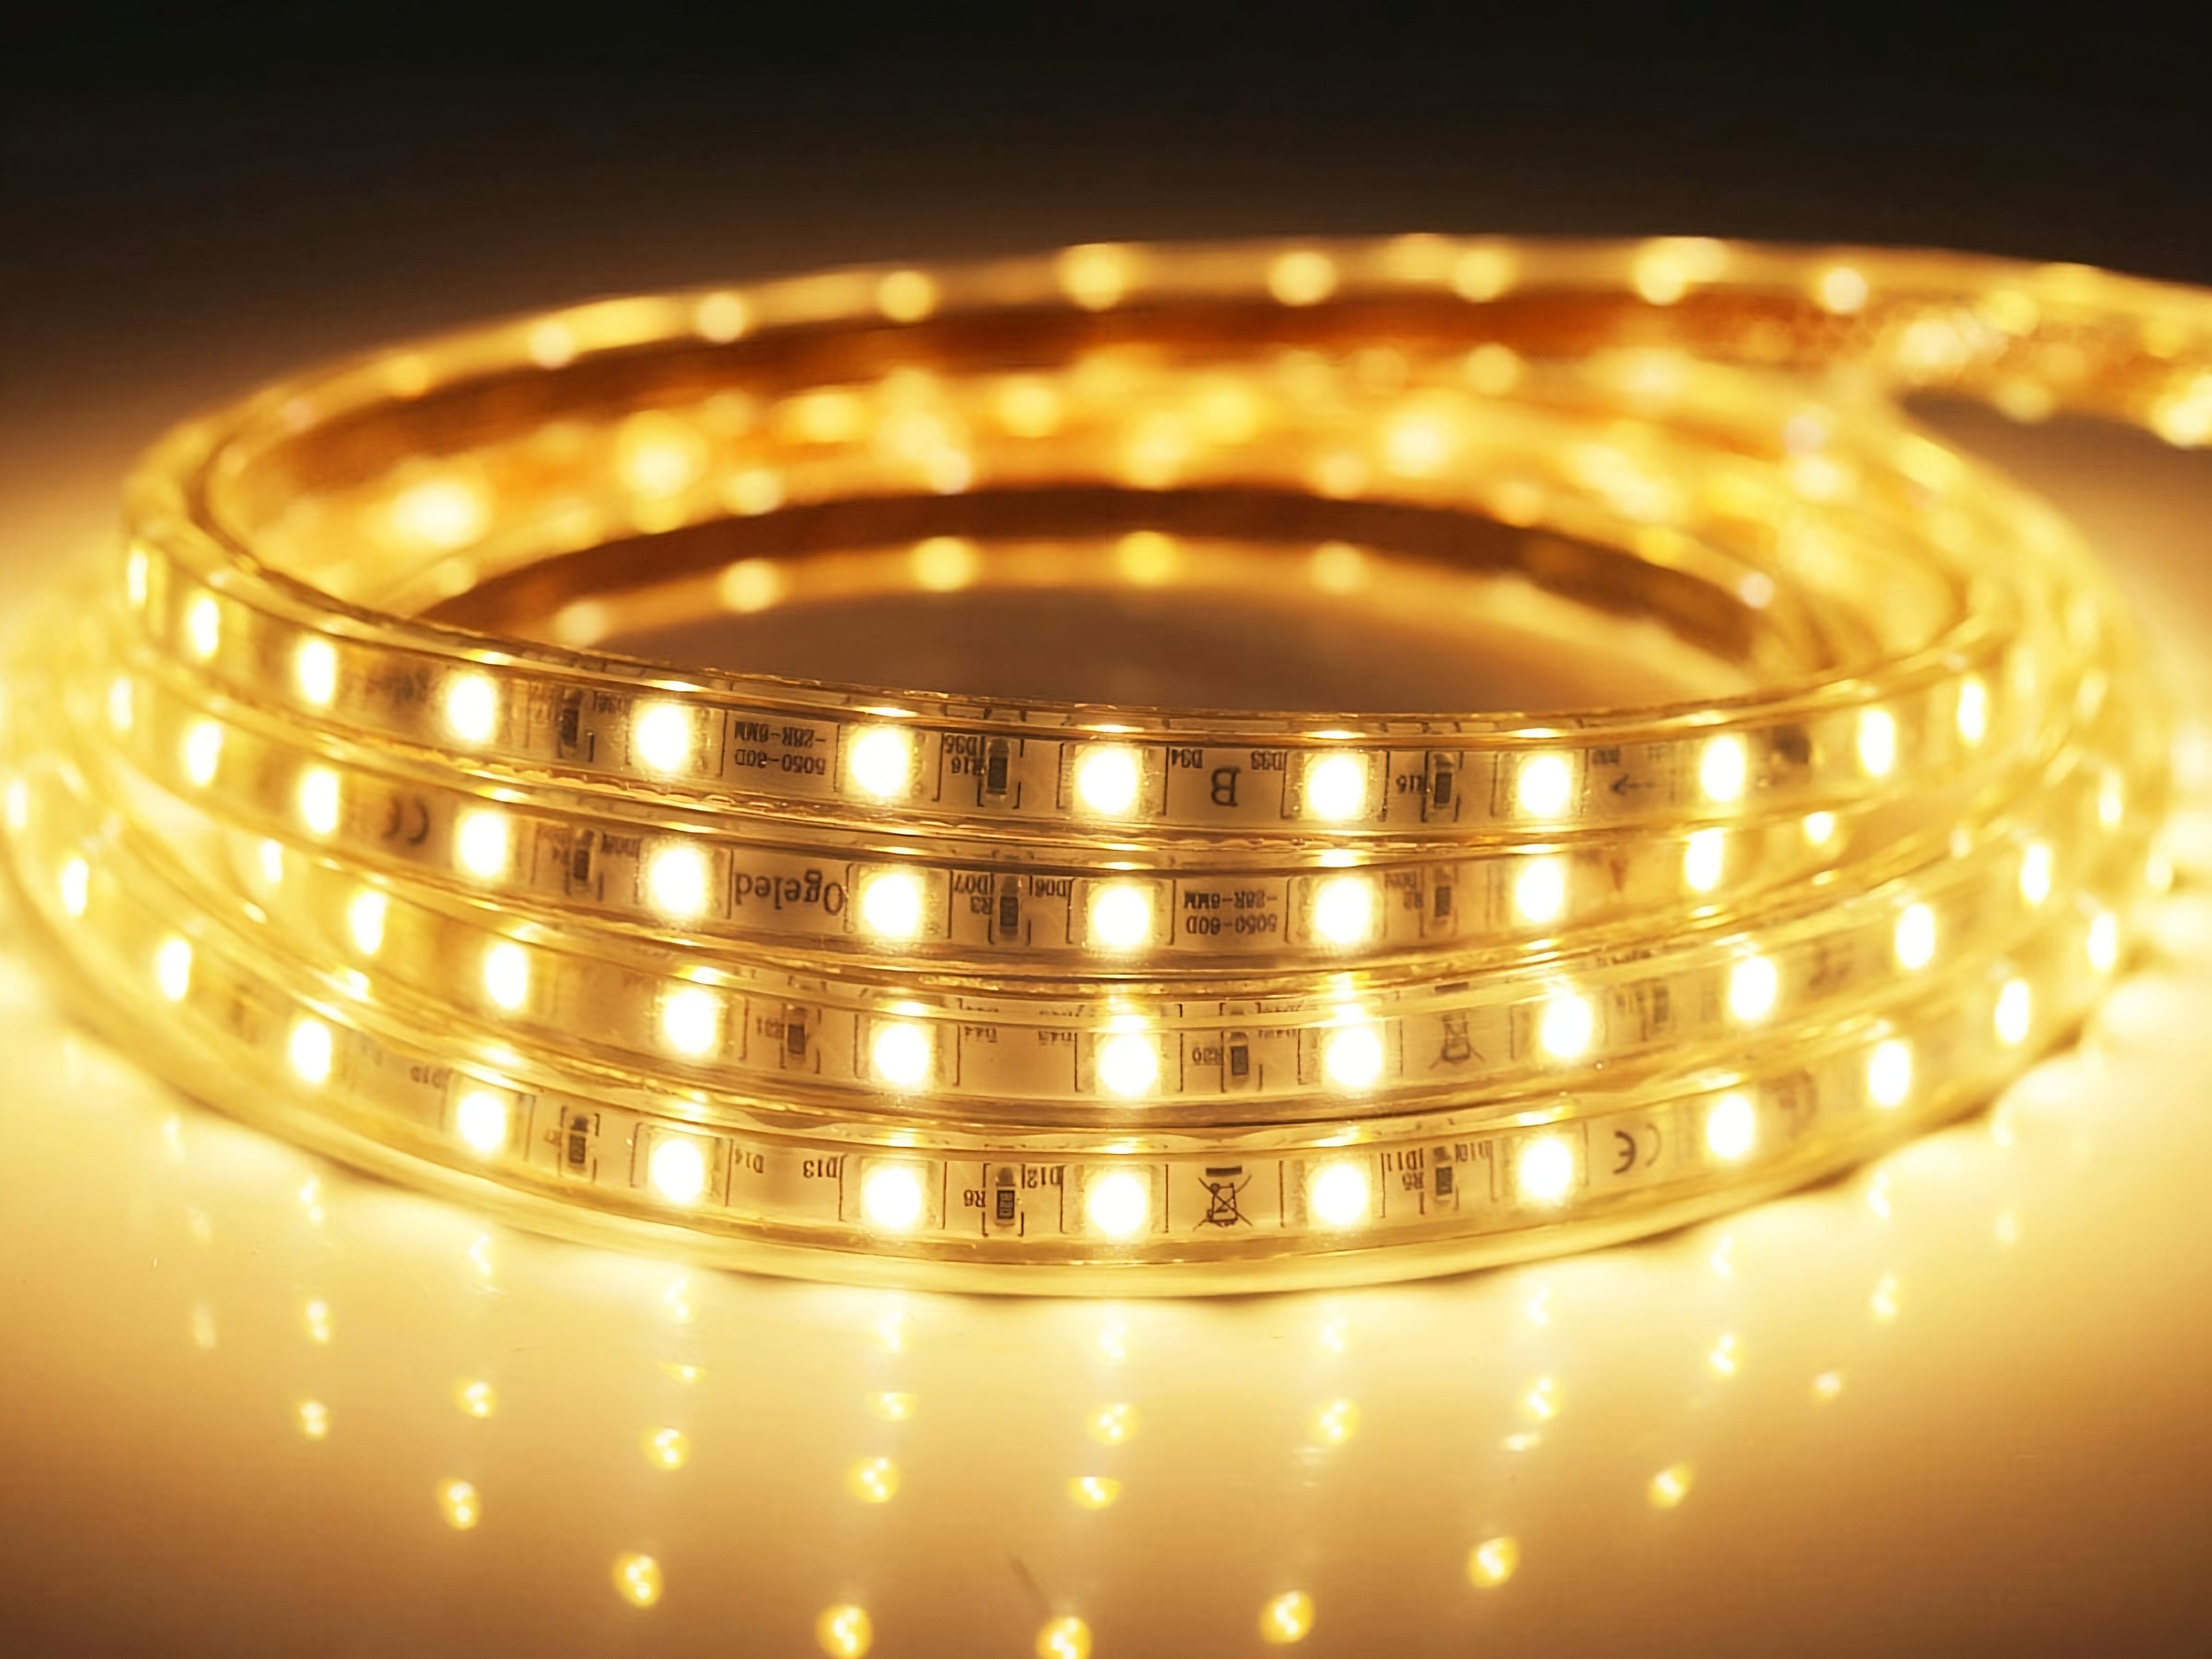 LED LED Streifen, LED LED Z60 Strip, Warmweiß Lichtleiste Ogeled Lichterkette Stripe